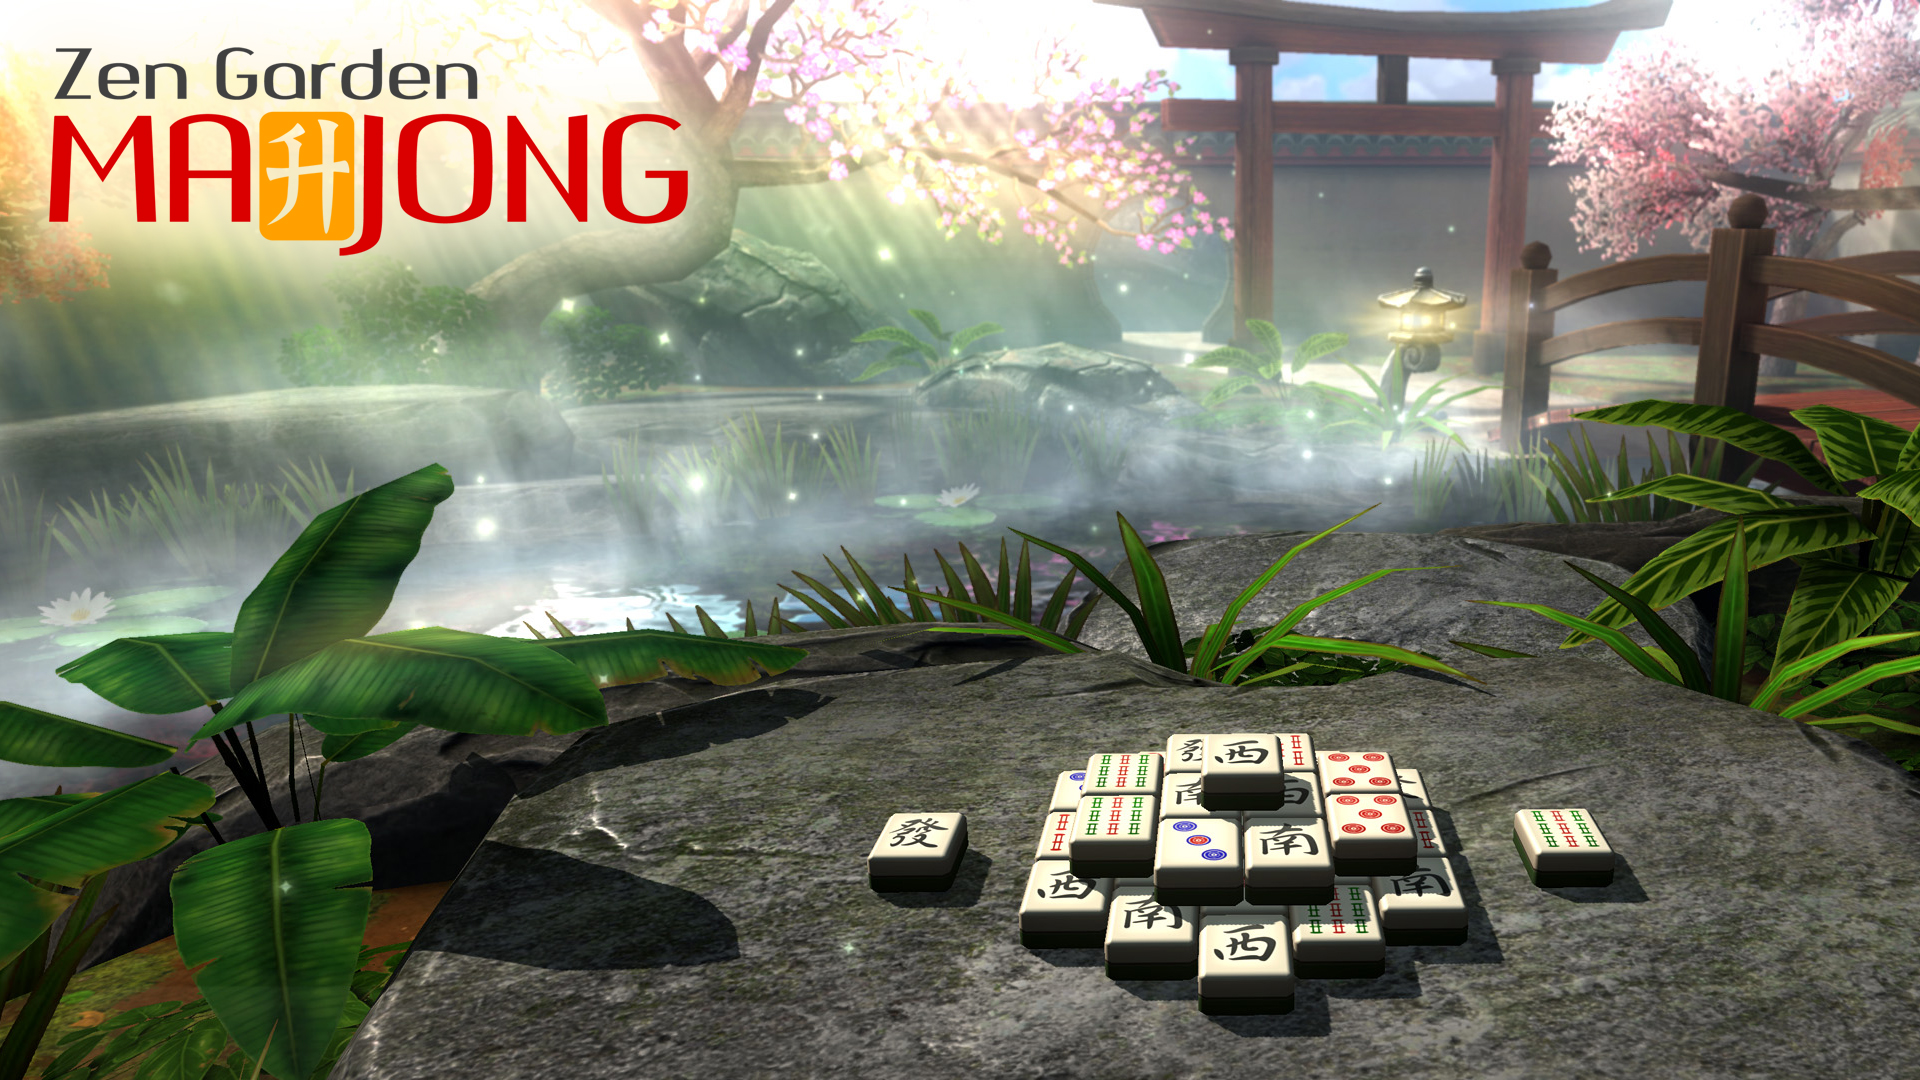 Zen Garden Mahjong Android Game Mod Db